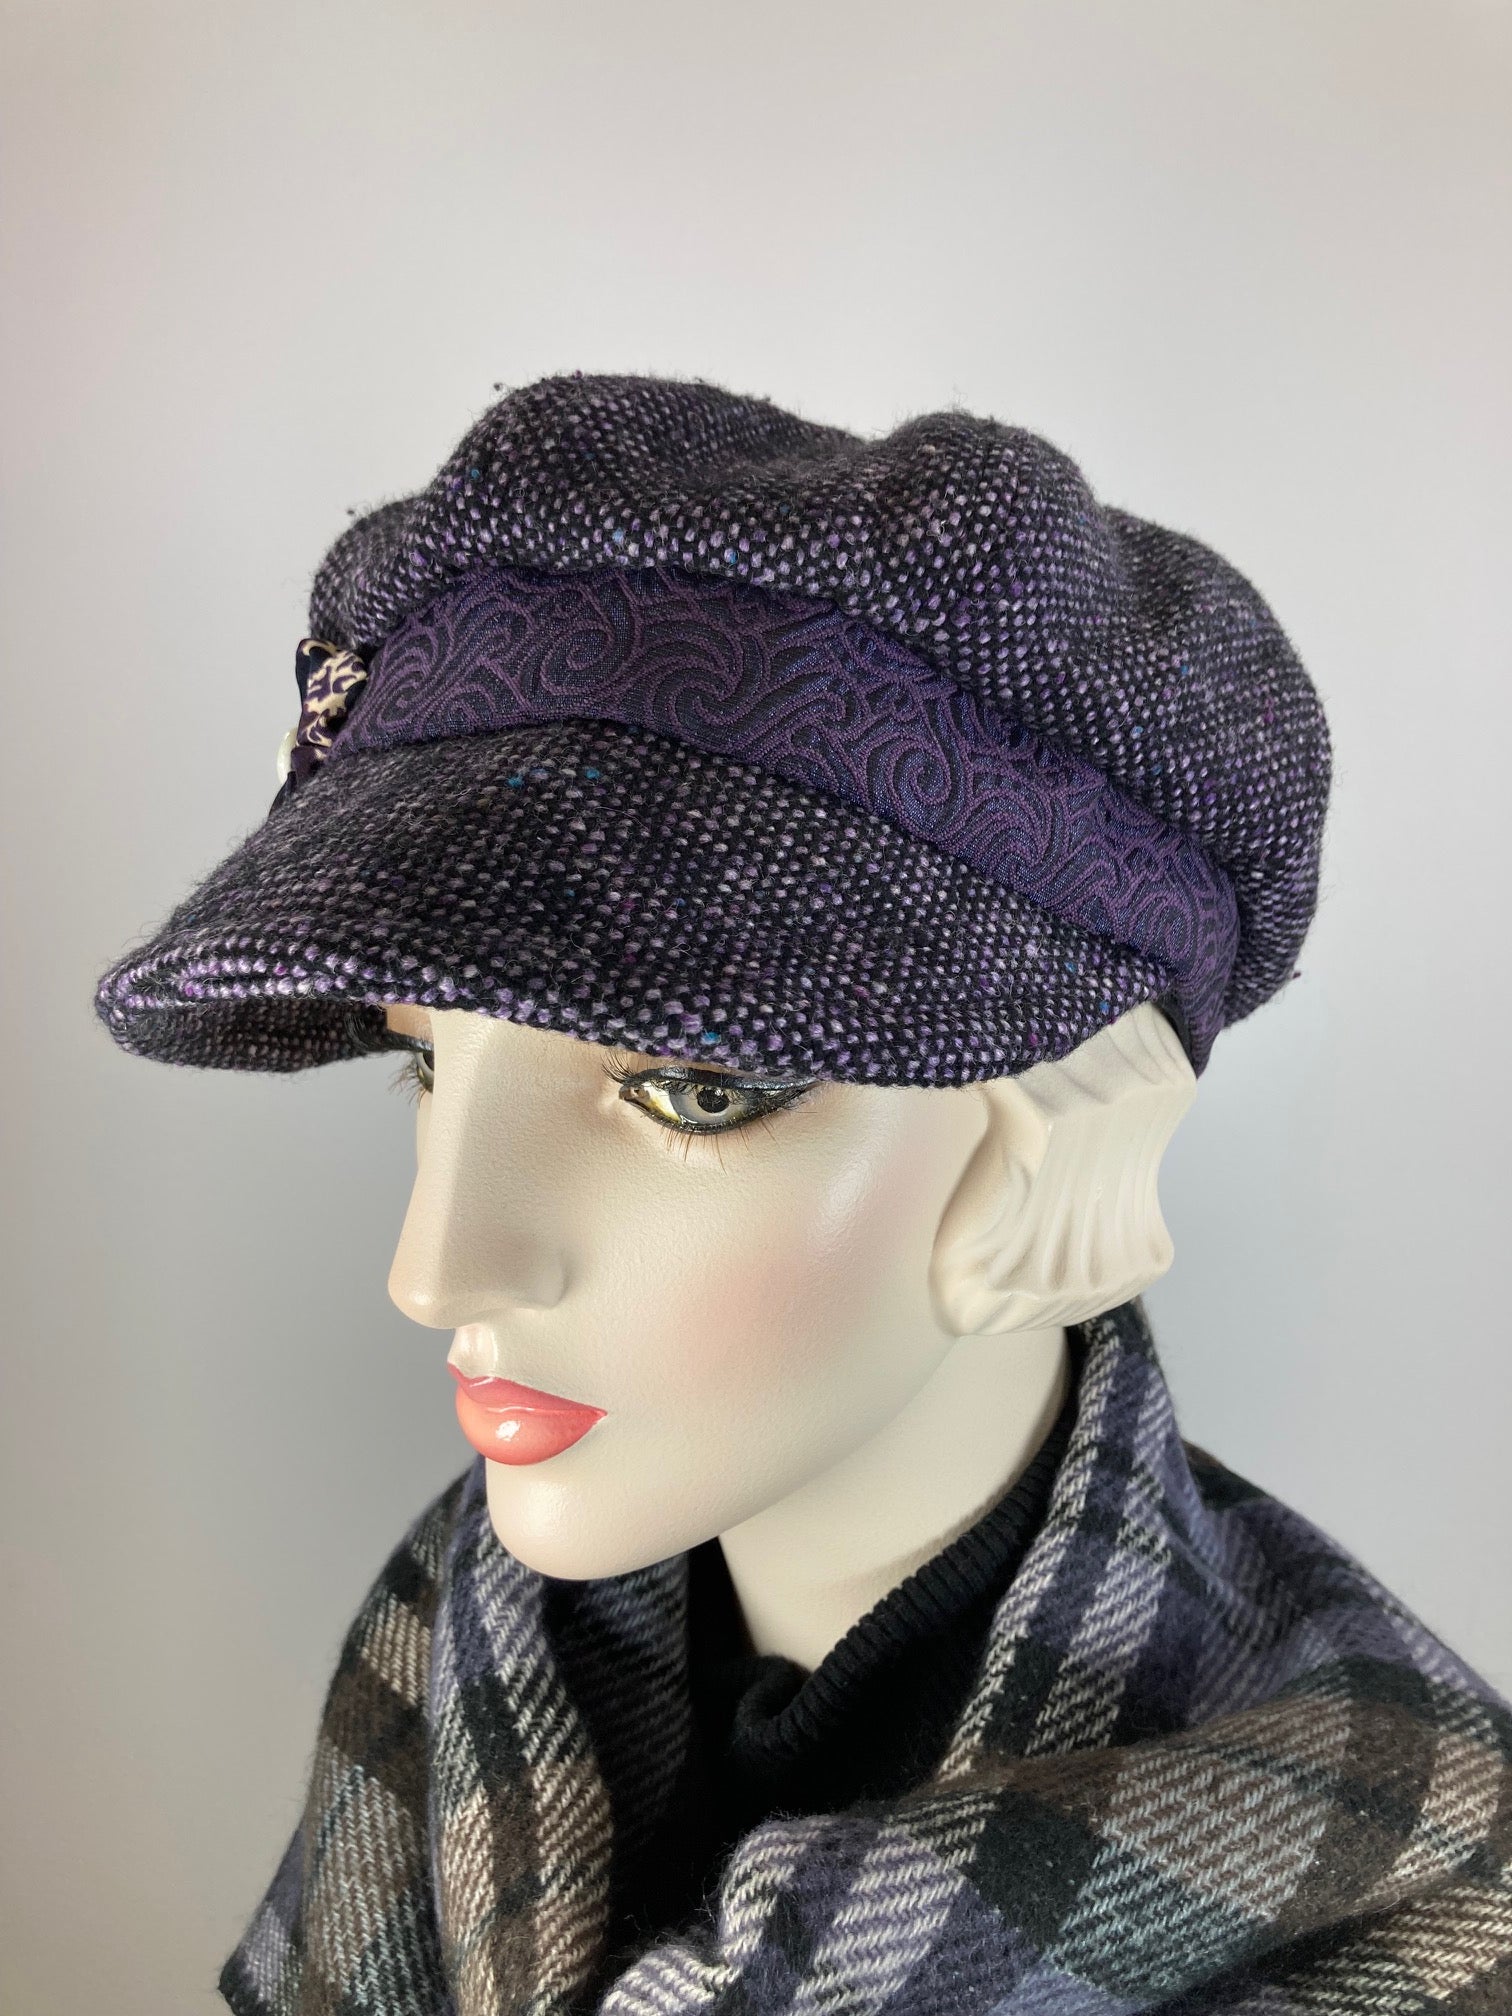 Womens Purple and Black Hat. Soft Newsboy Hat. Slouchy Newsboy Cap. Ladies Warm Winter Hat. Classic ladies paperboy hat. Cabbie hat women.